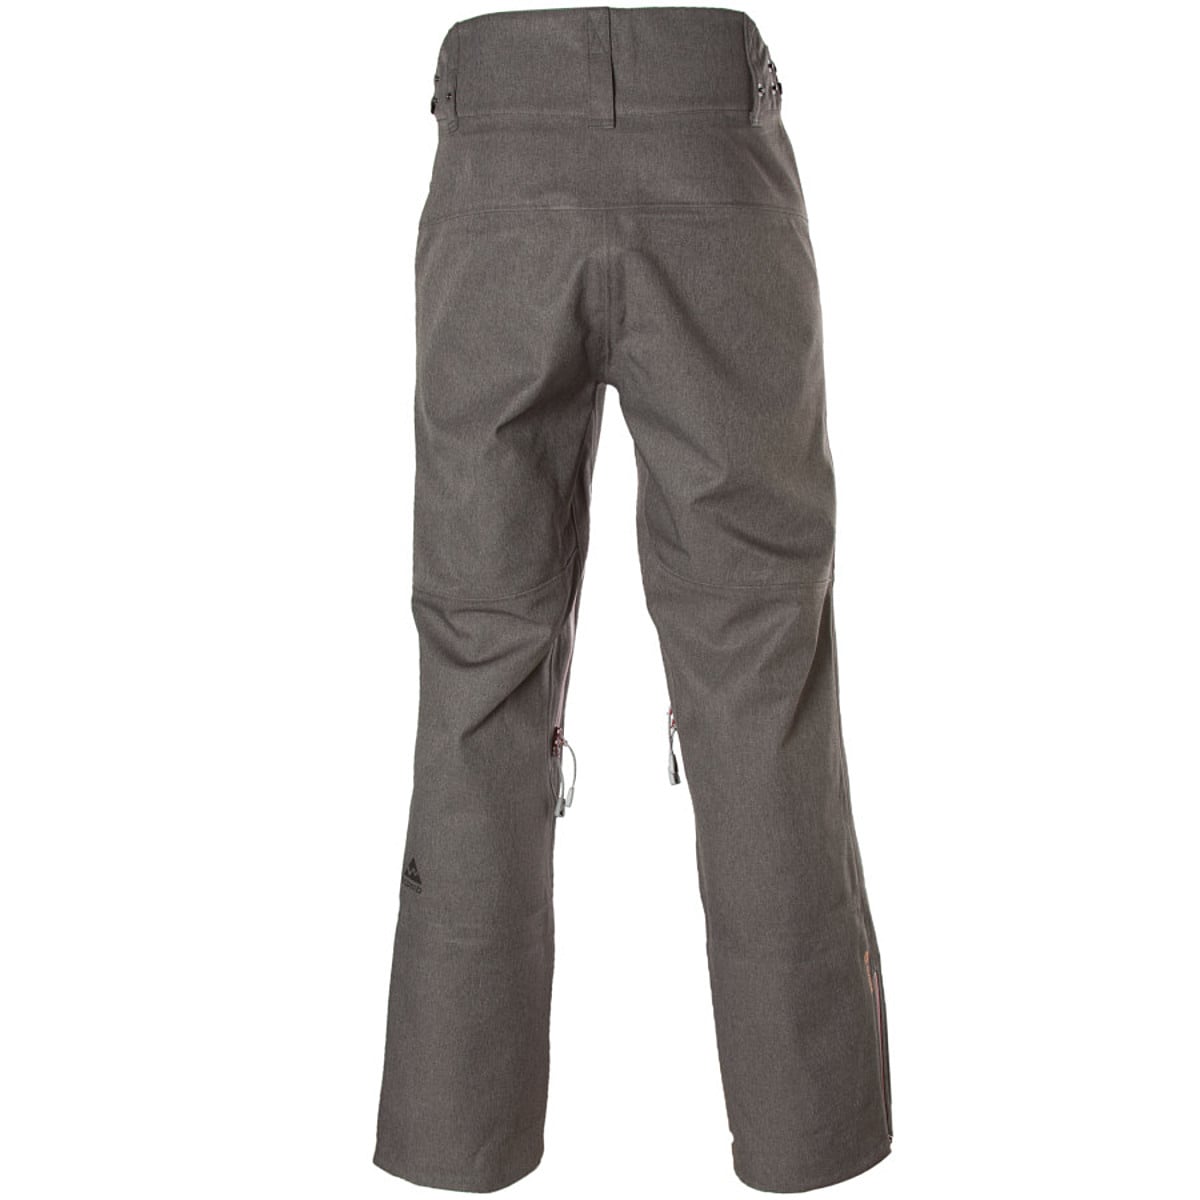 Westcomb Vapor FX Cargo Pant - Men's - Clothing